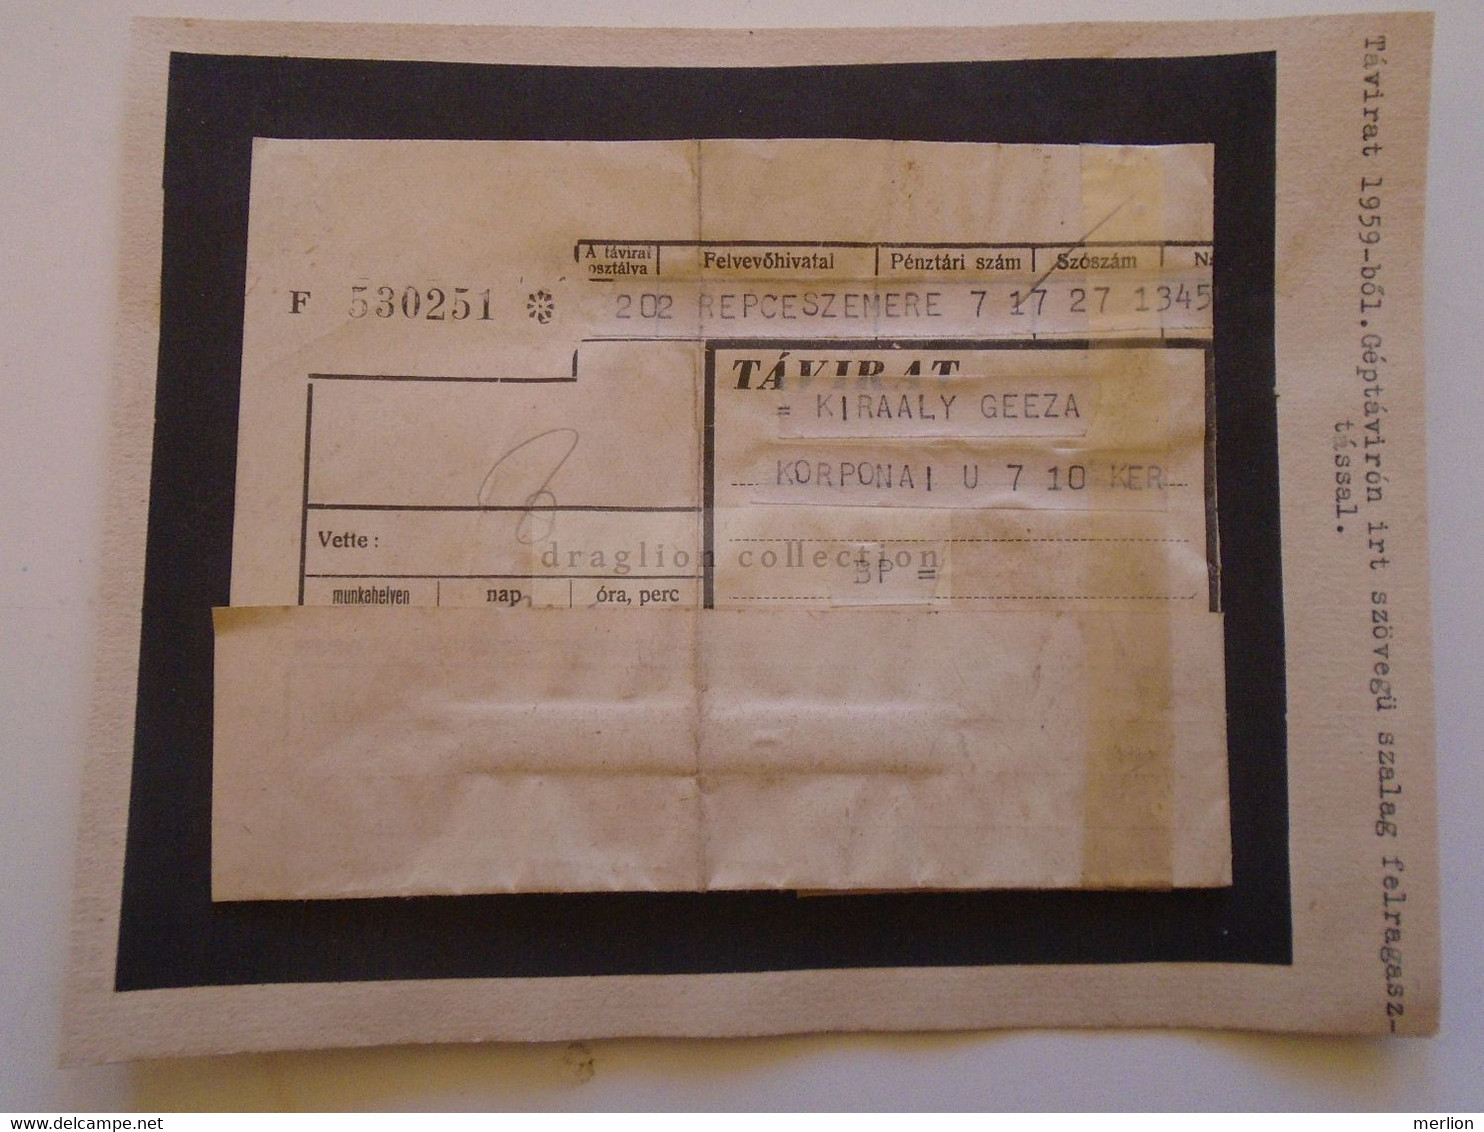 ZA120.2  HUNGARY  Tavirat Telegraph Telegram Répceszemere  1959 - Telegrafi